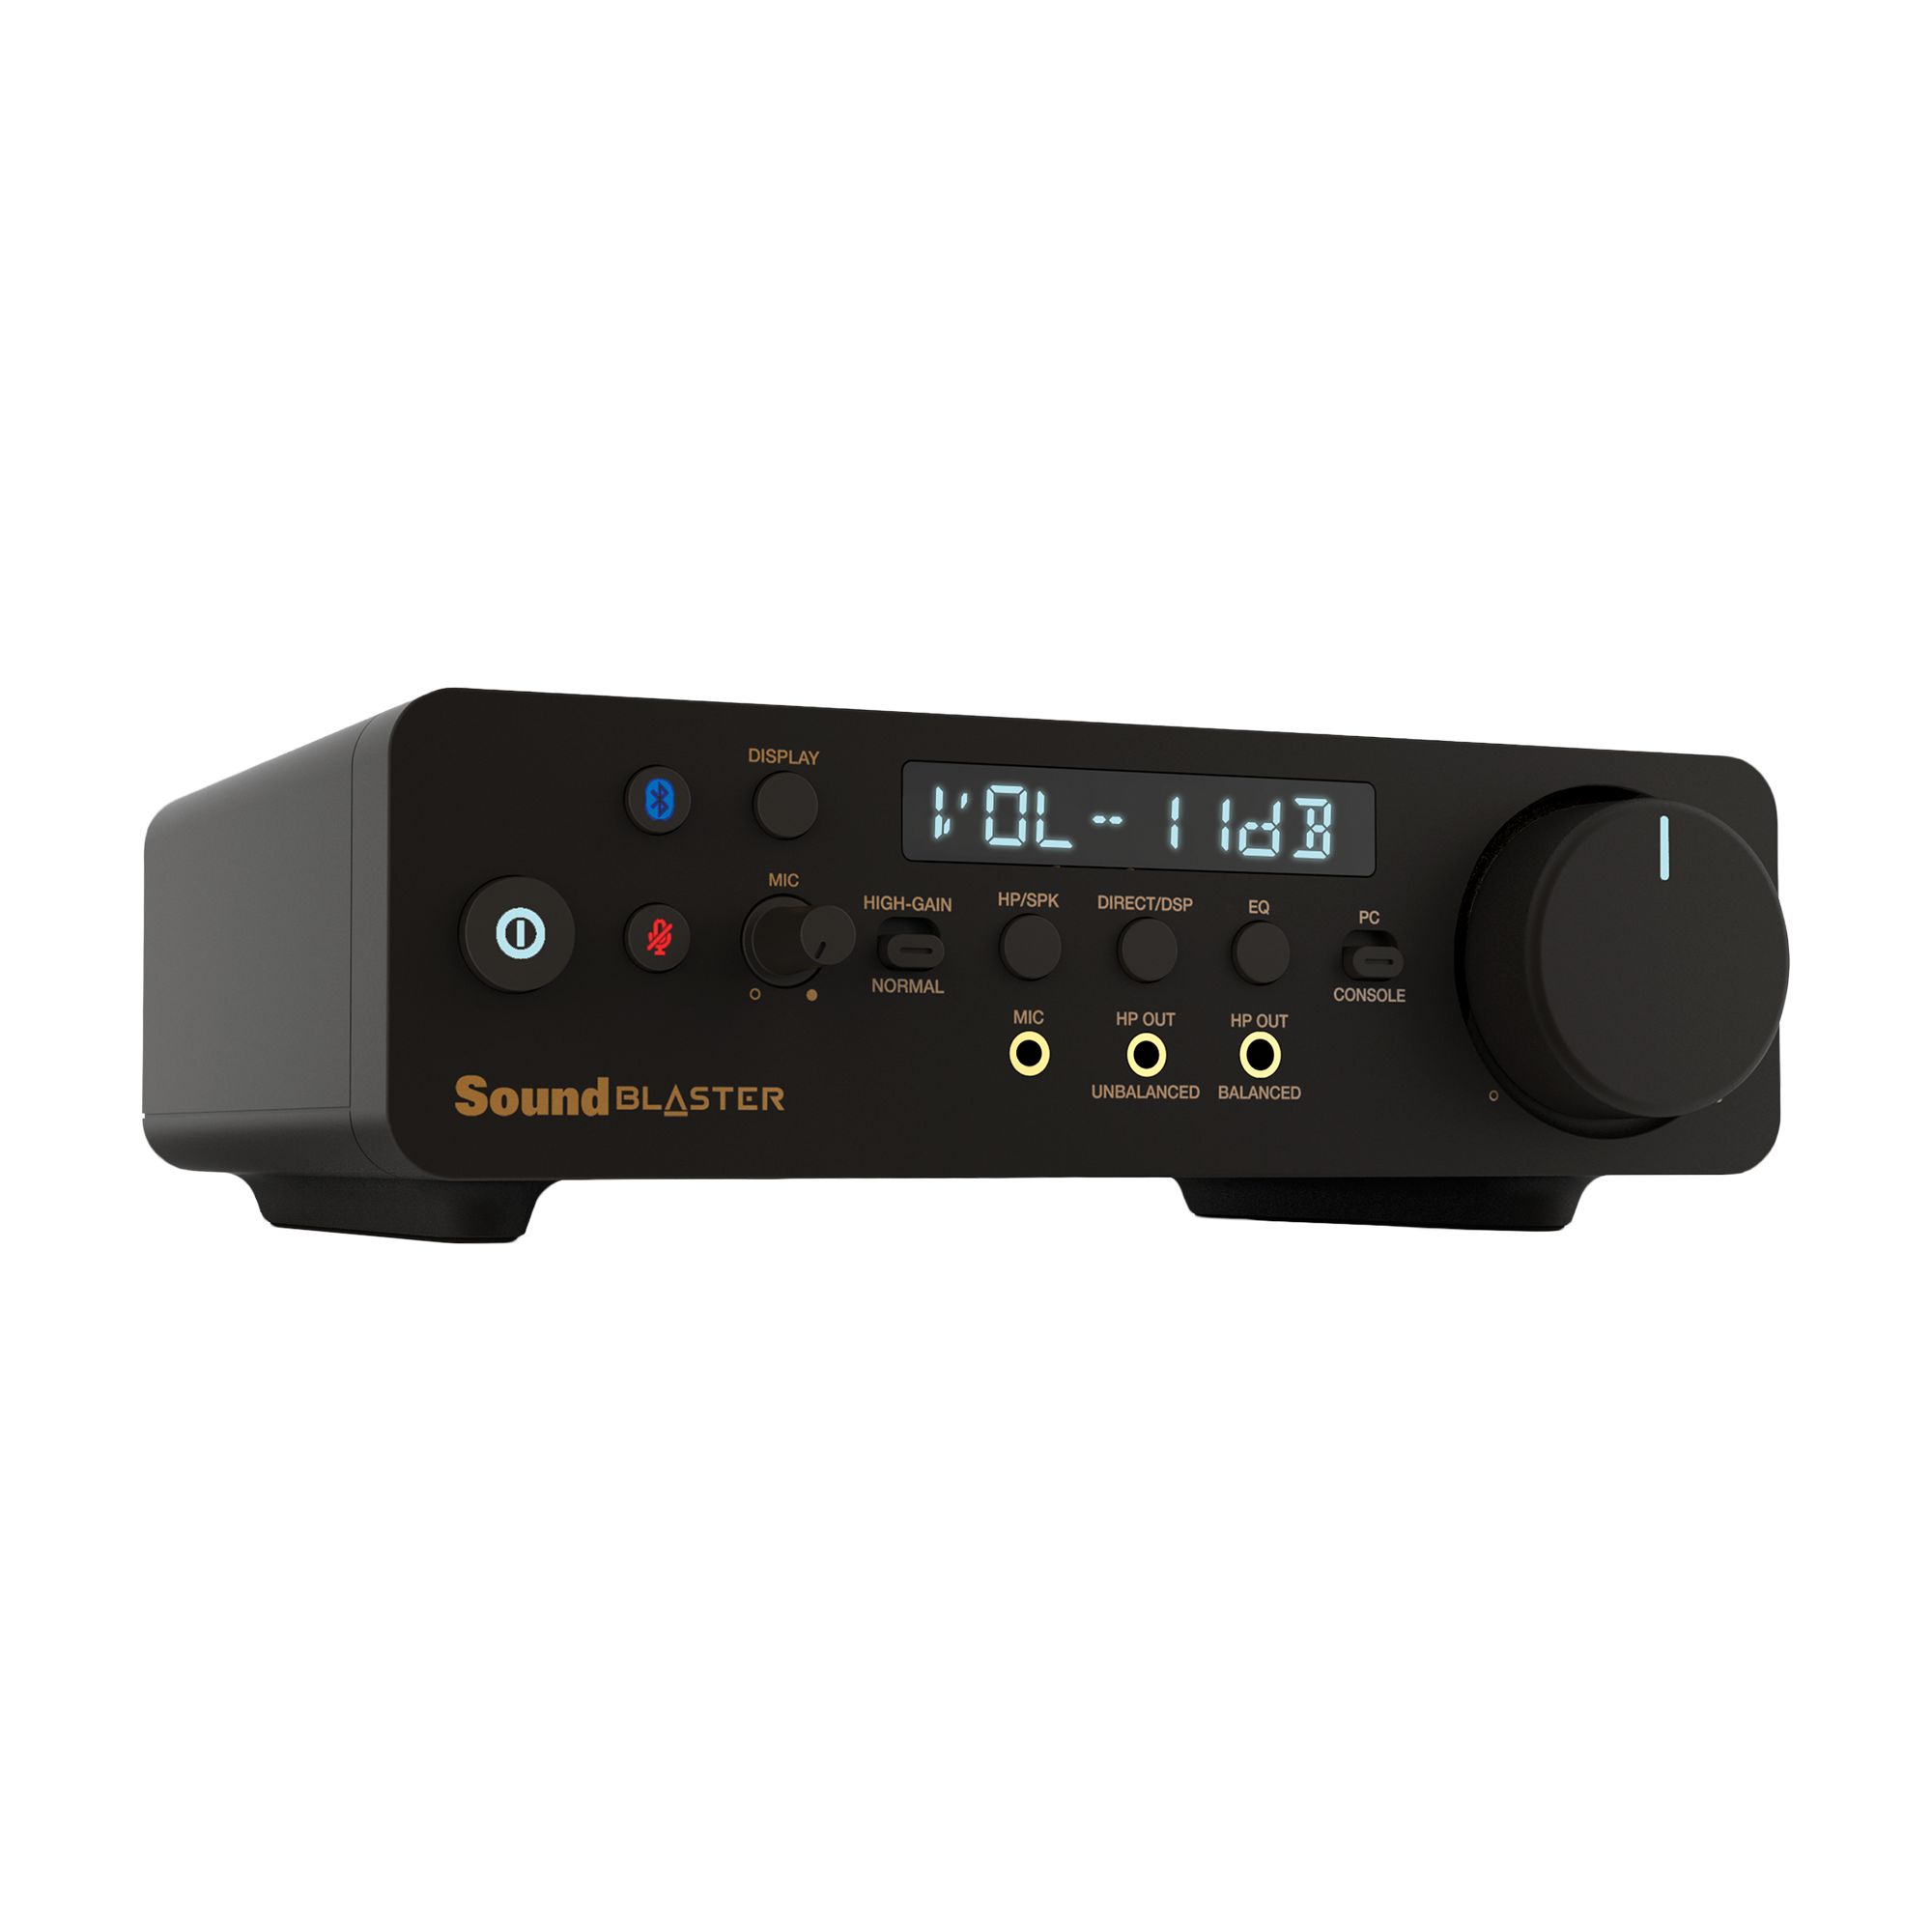 Sound Blaster X5 - 适合发烧友使用，支持全平衡的Xamp 耳机双放大器的